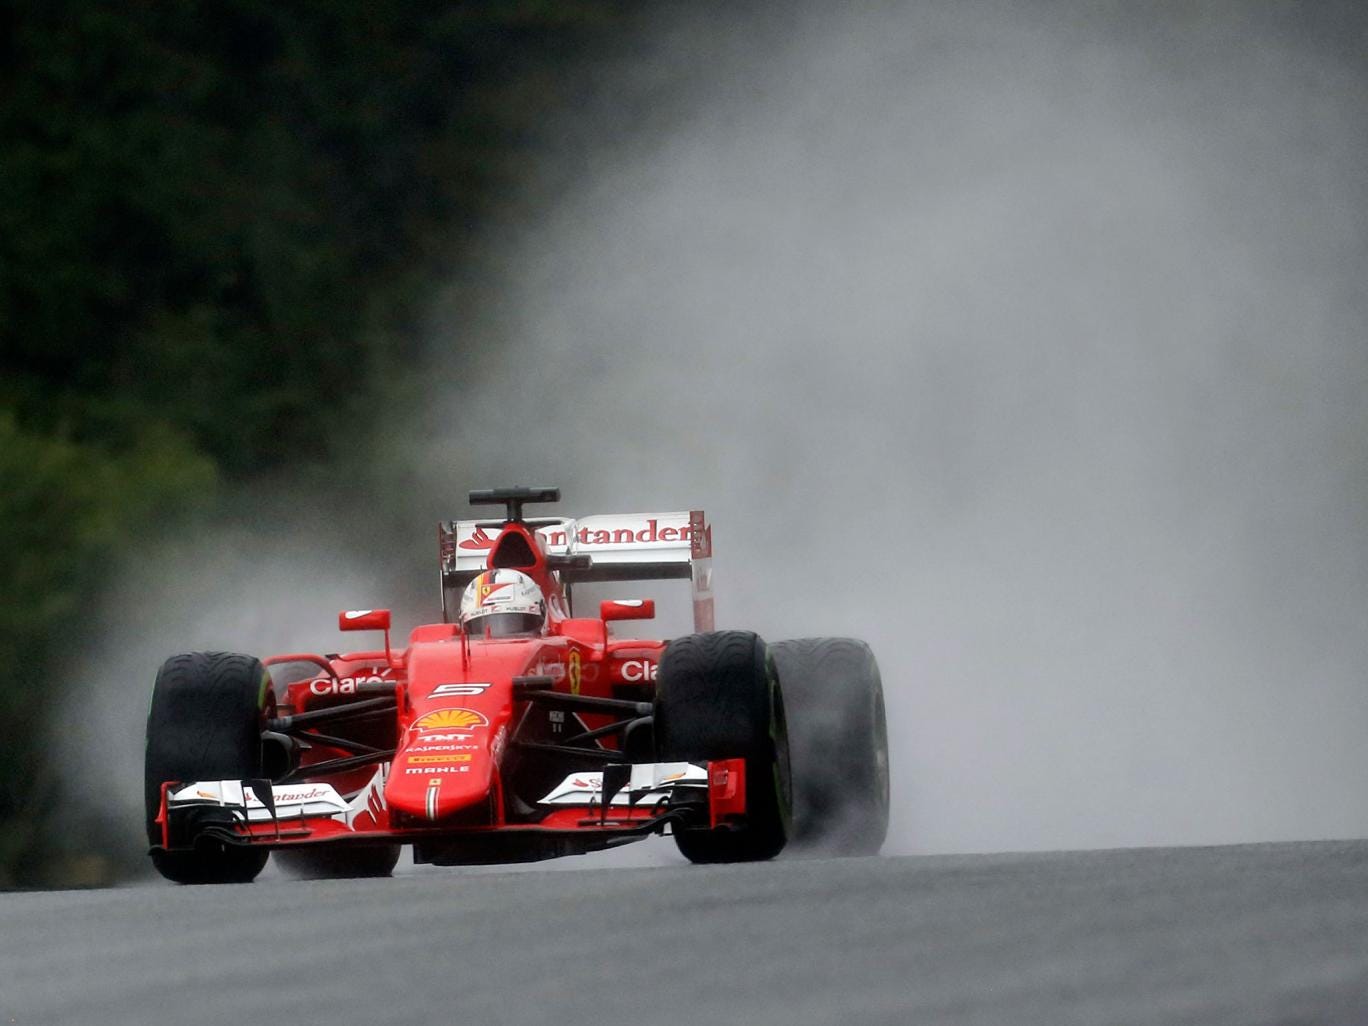 http://static.independent.co.uk/s3fs-public/styles/story_large/public/thumbnails/image/2015/06/20/11/Vettel.jpg